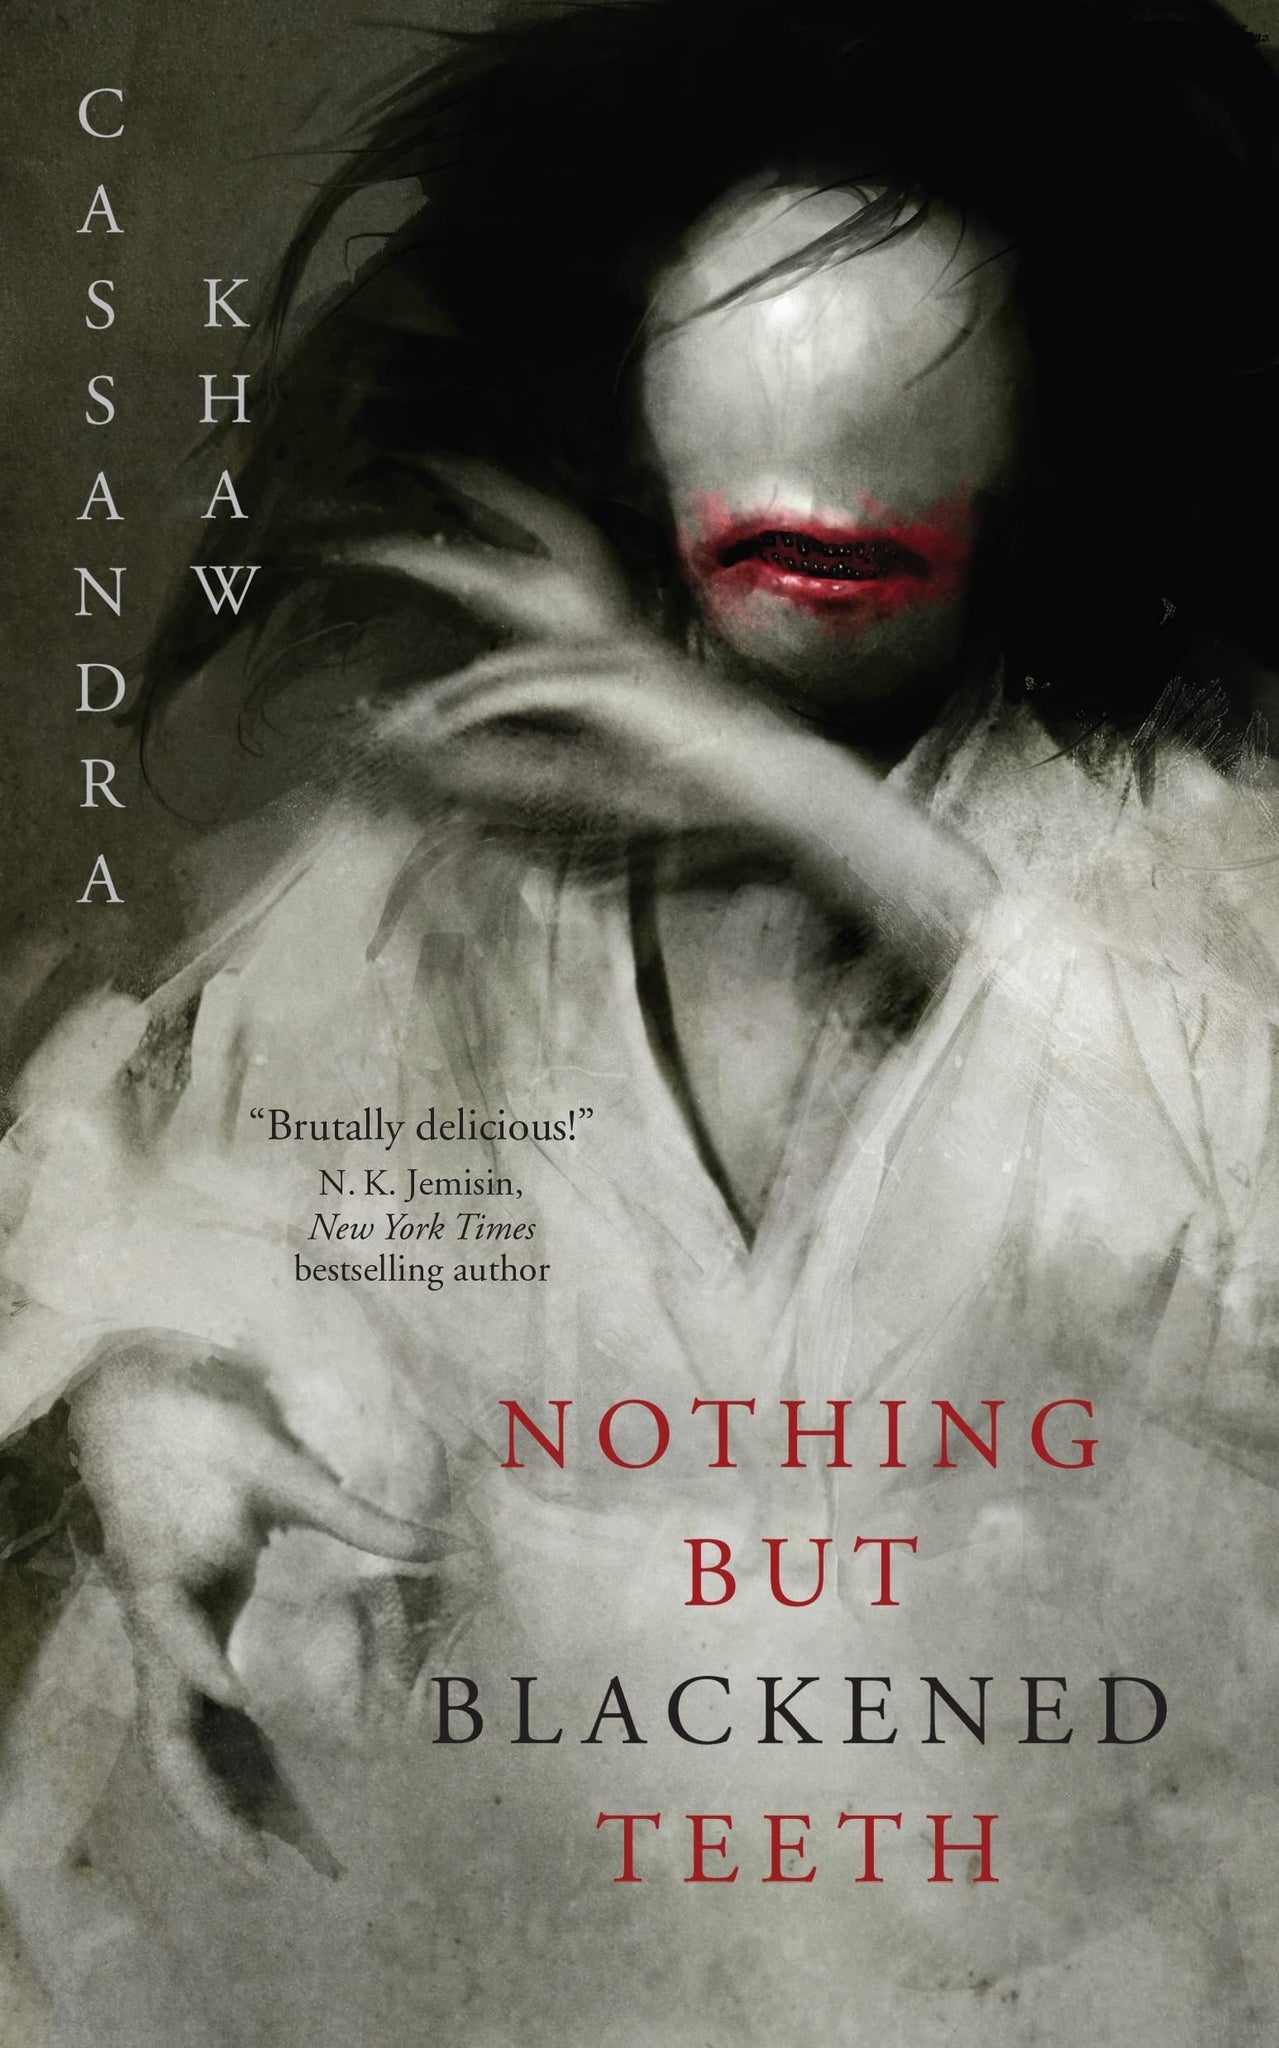 Nothing But Blackened Teeth - Cassandra Khaw (Hardcover)